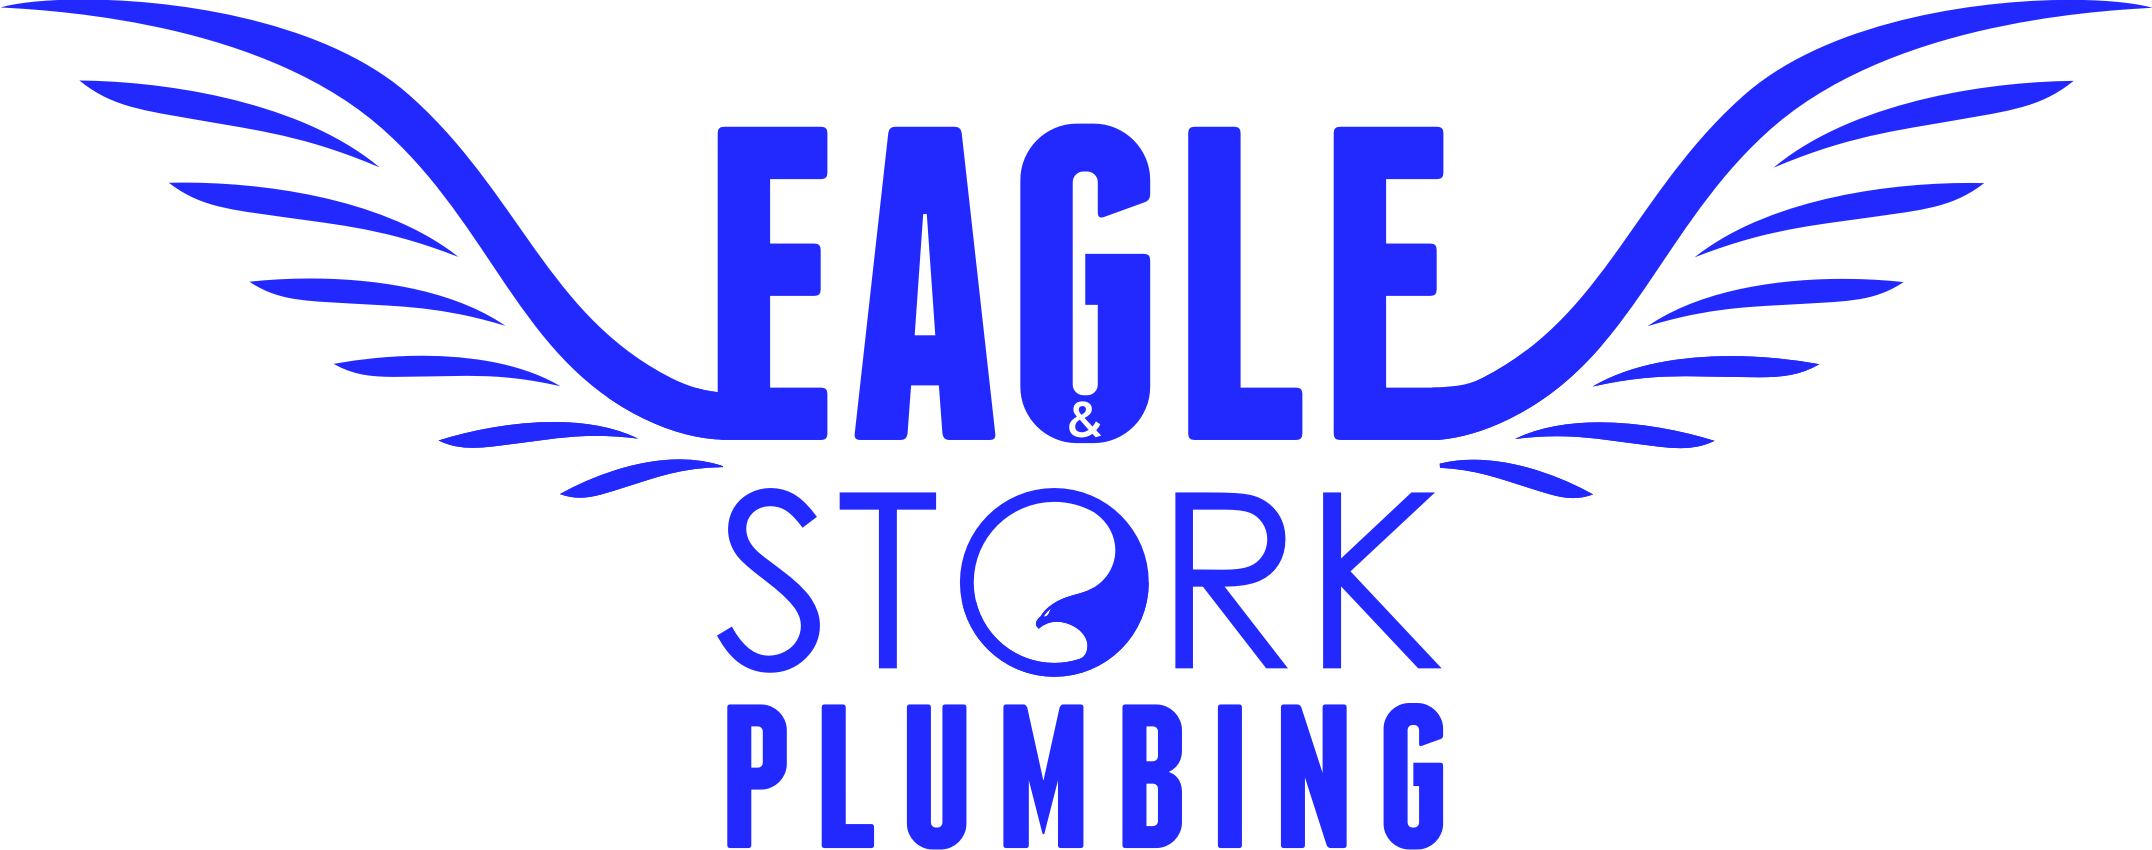 Eagle & Stork Plumbing Pty Ltd